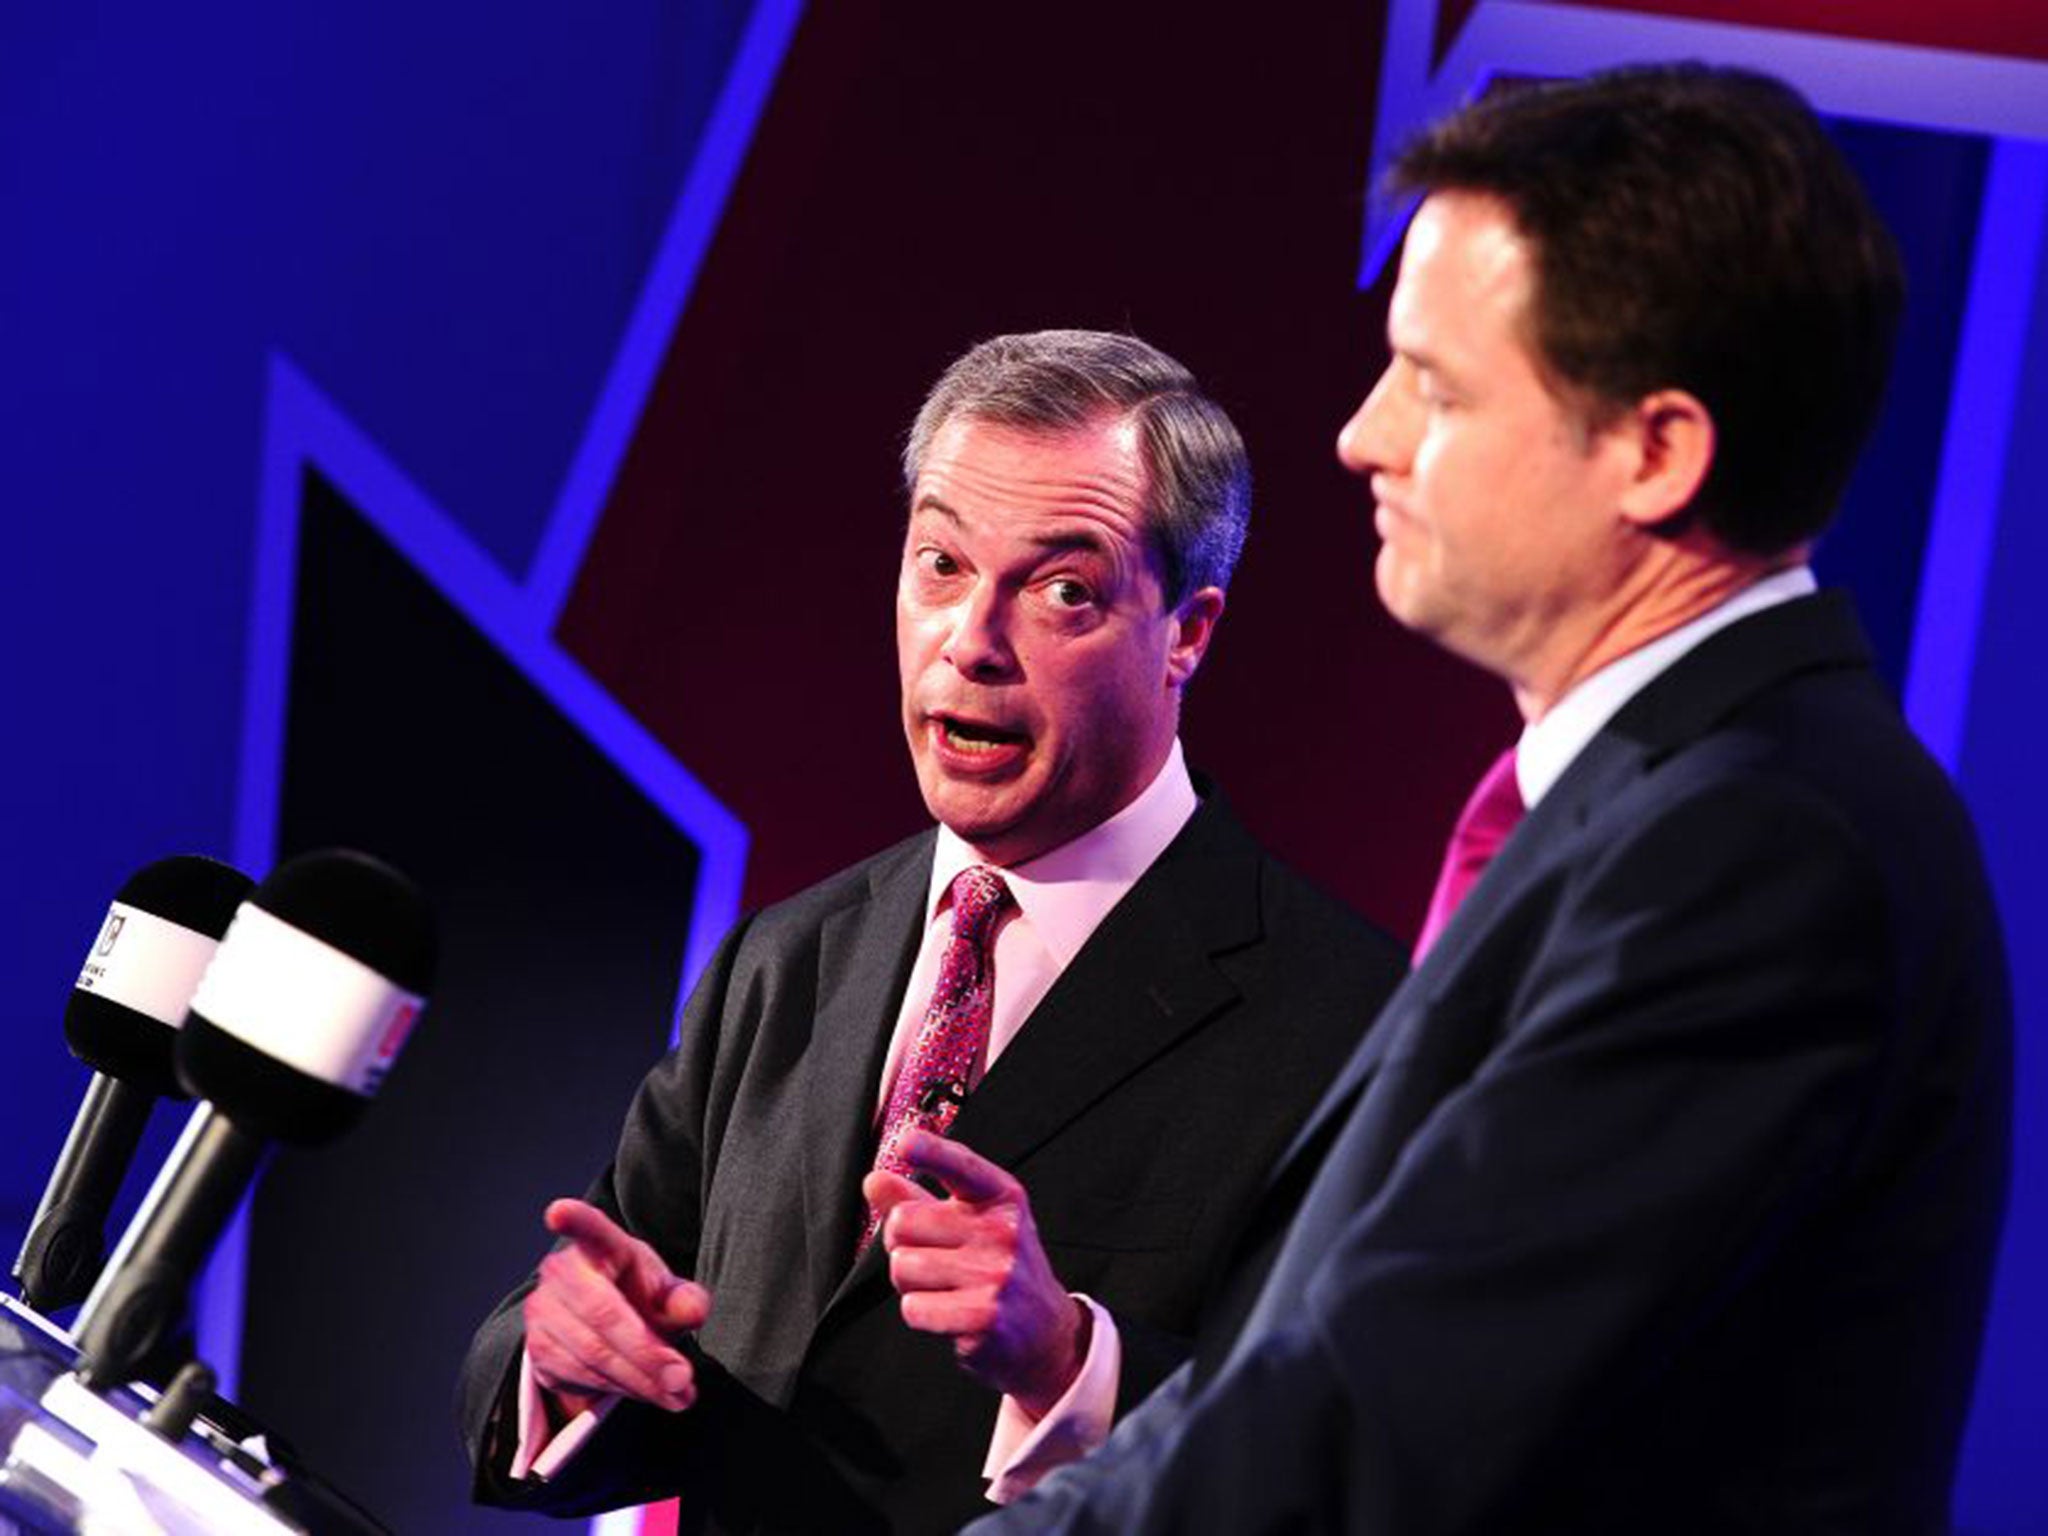 Nigel Farage took on Nick Clegg in a TV debate about Britain’s membership of the EU in March last year